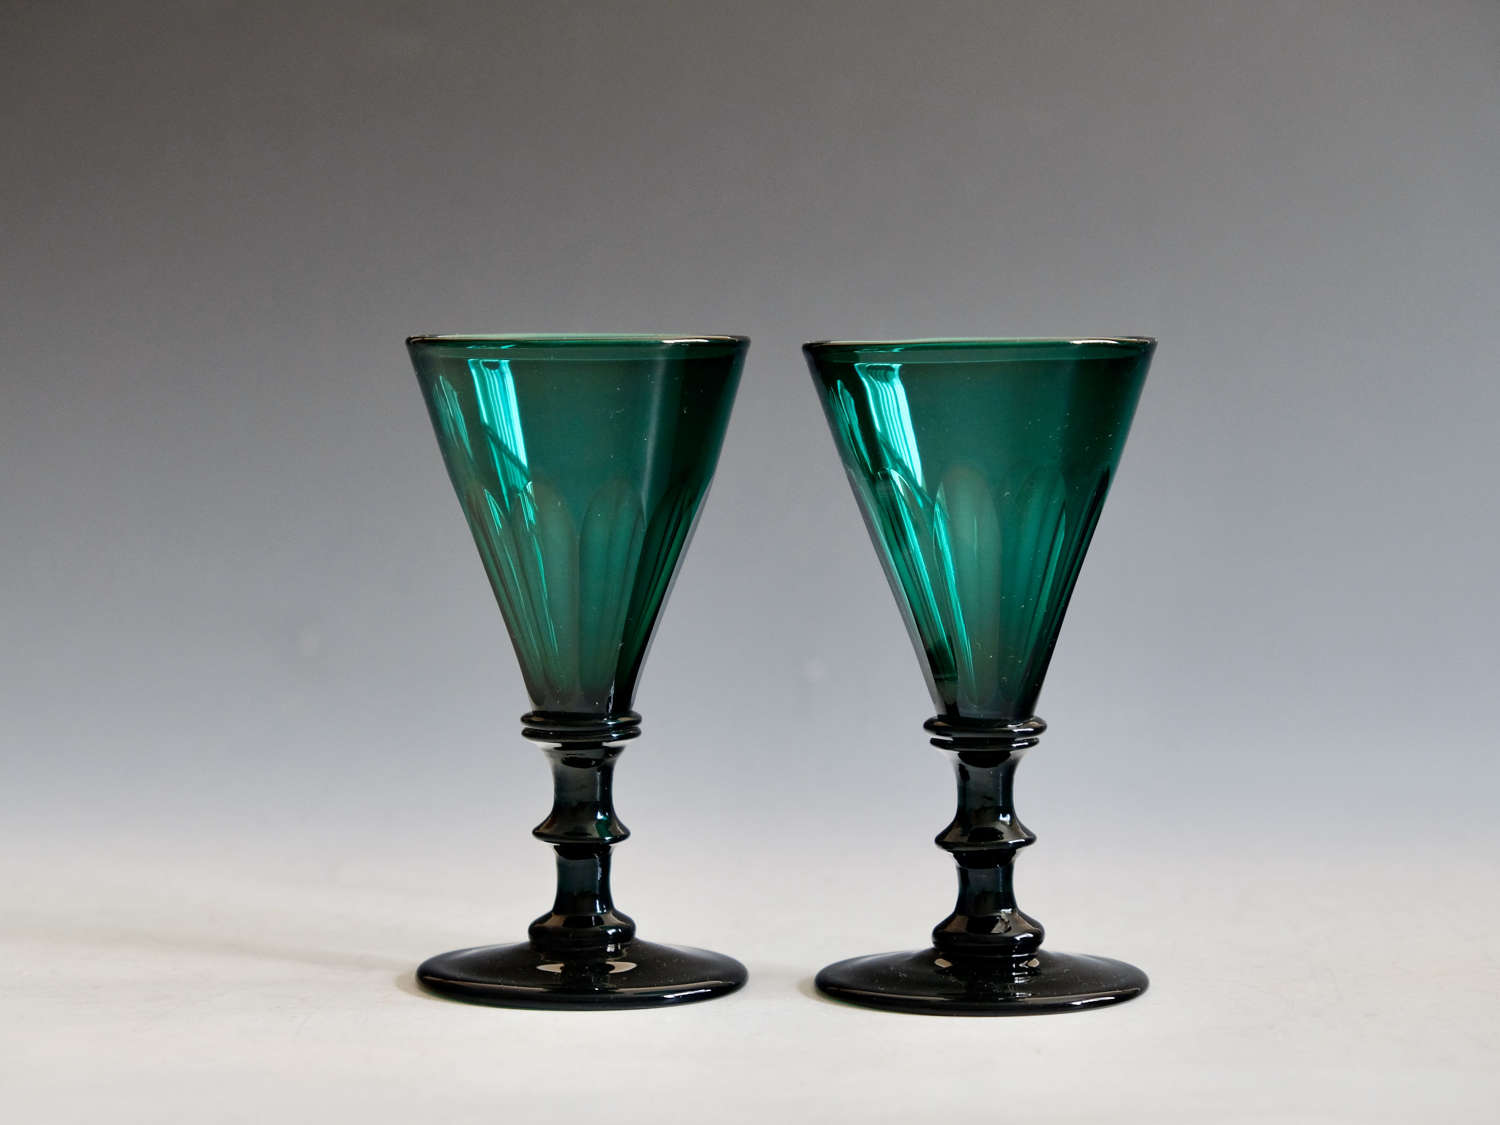 Antique glass green wine glasses pair English c1830